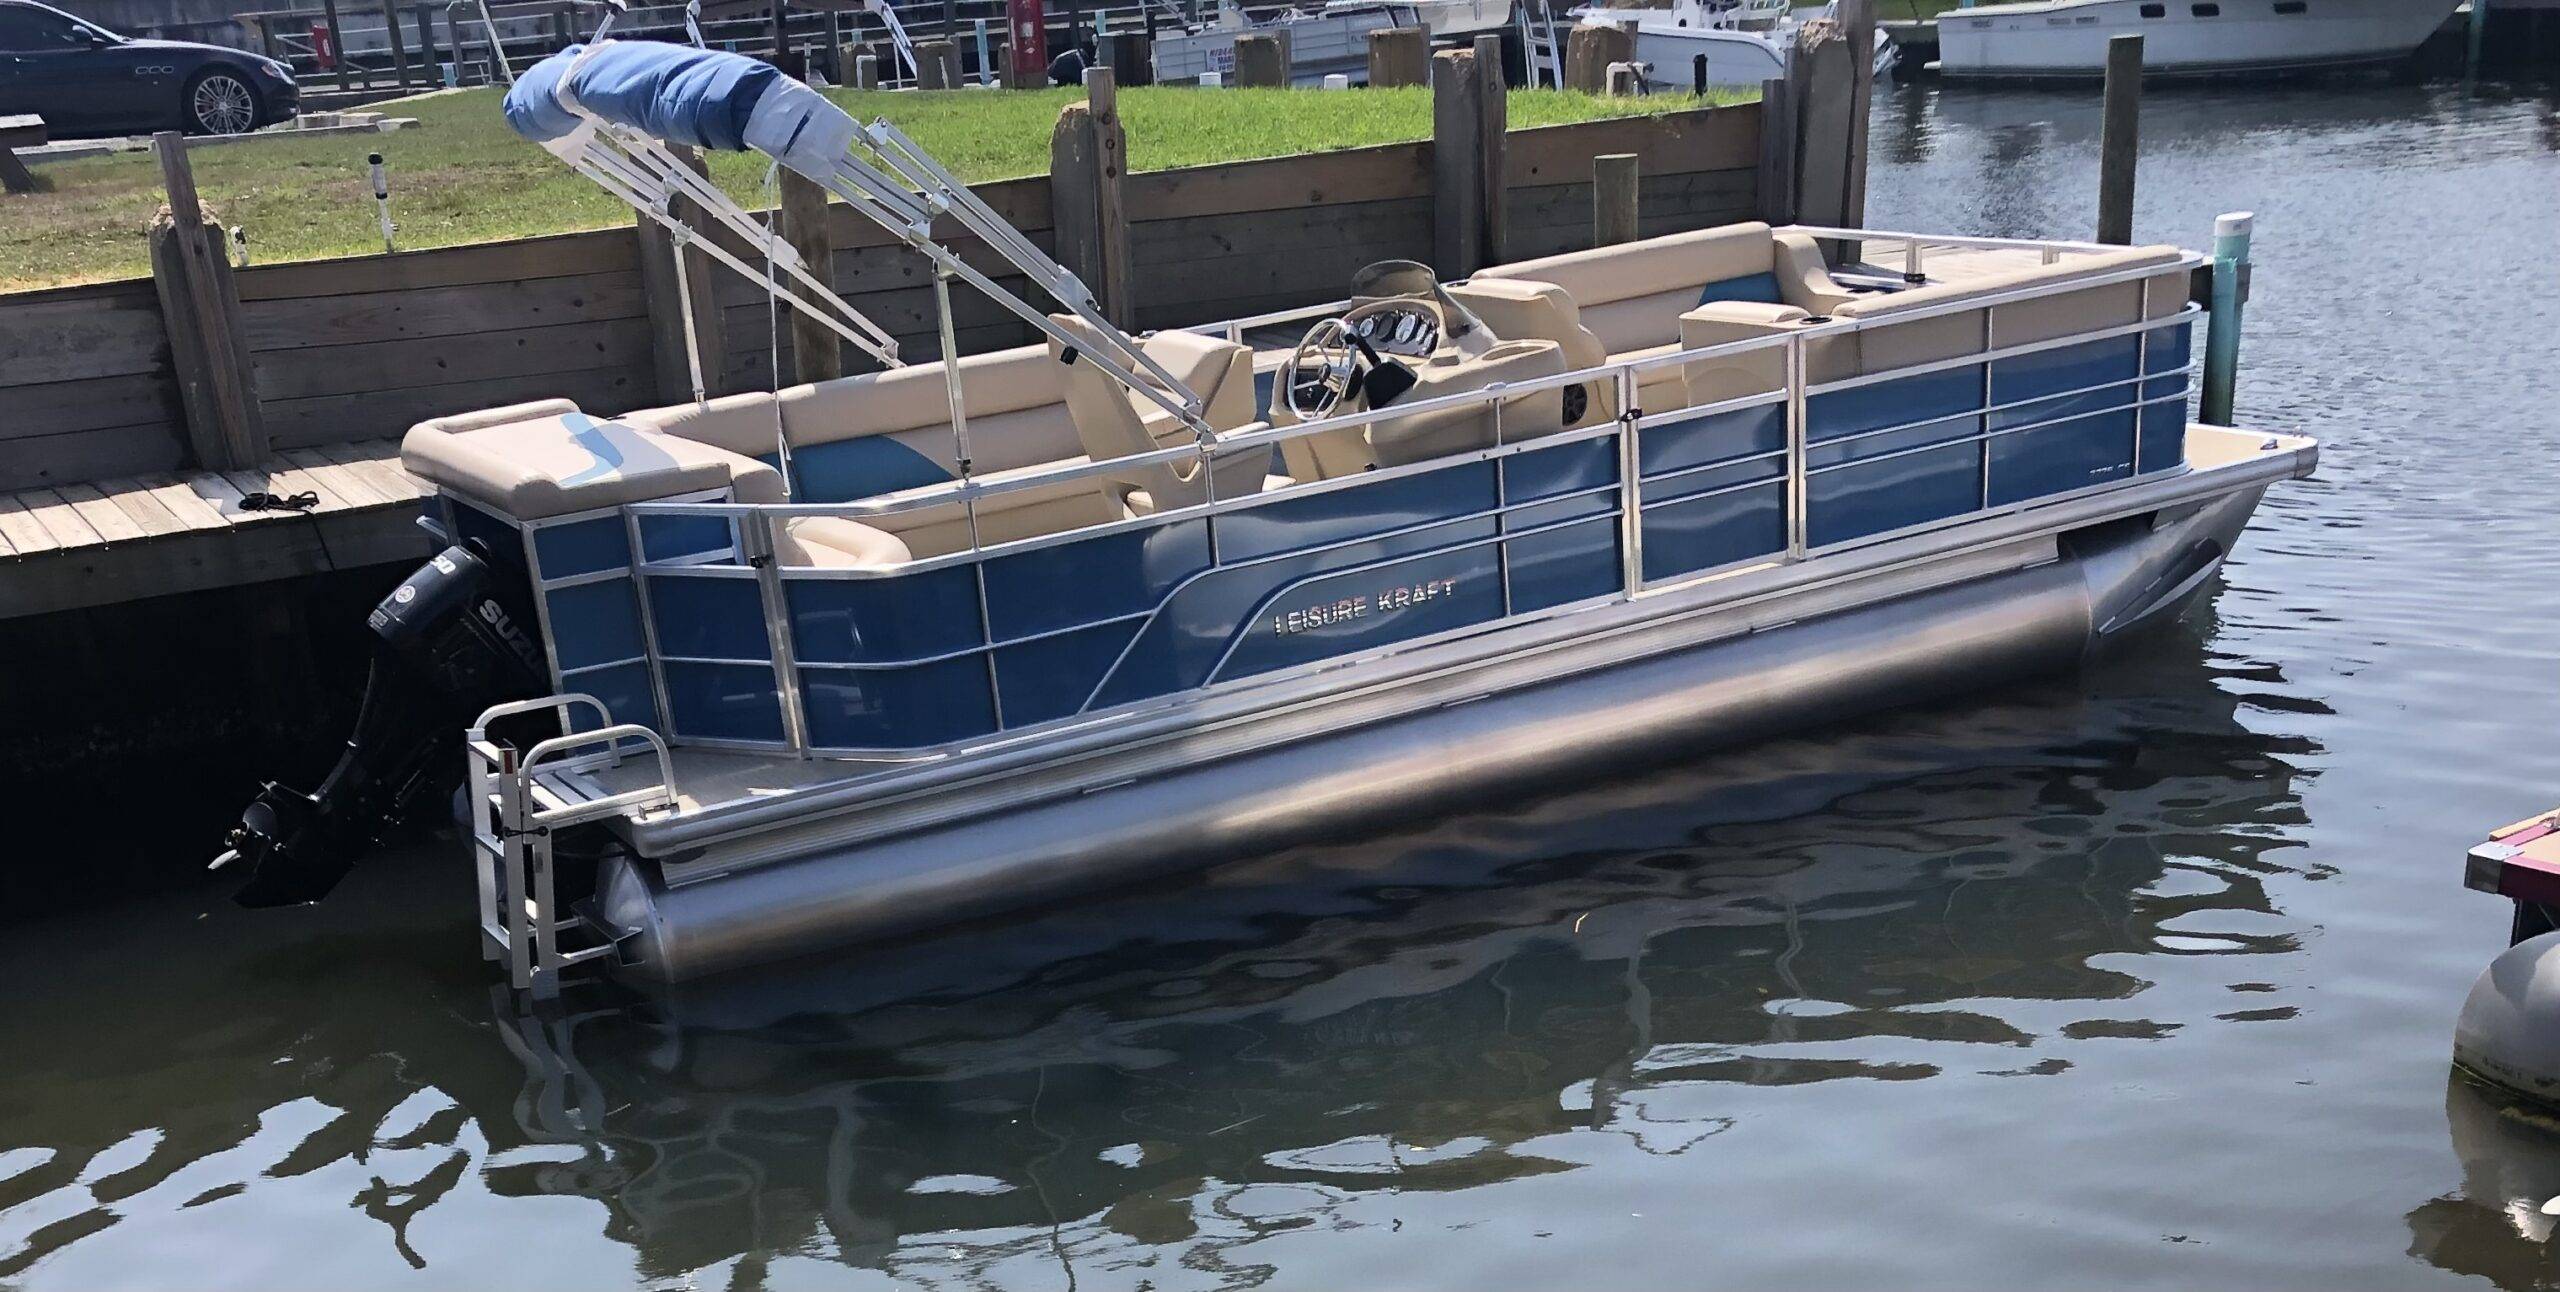 A docked pontoon boat awaits its next adventure with pontoon rentals in Panama City.